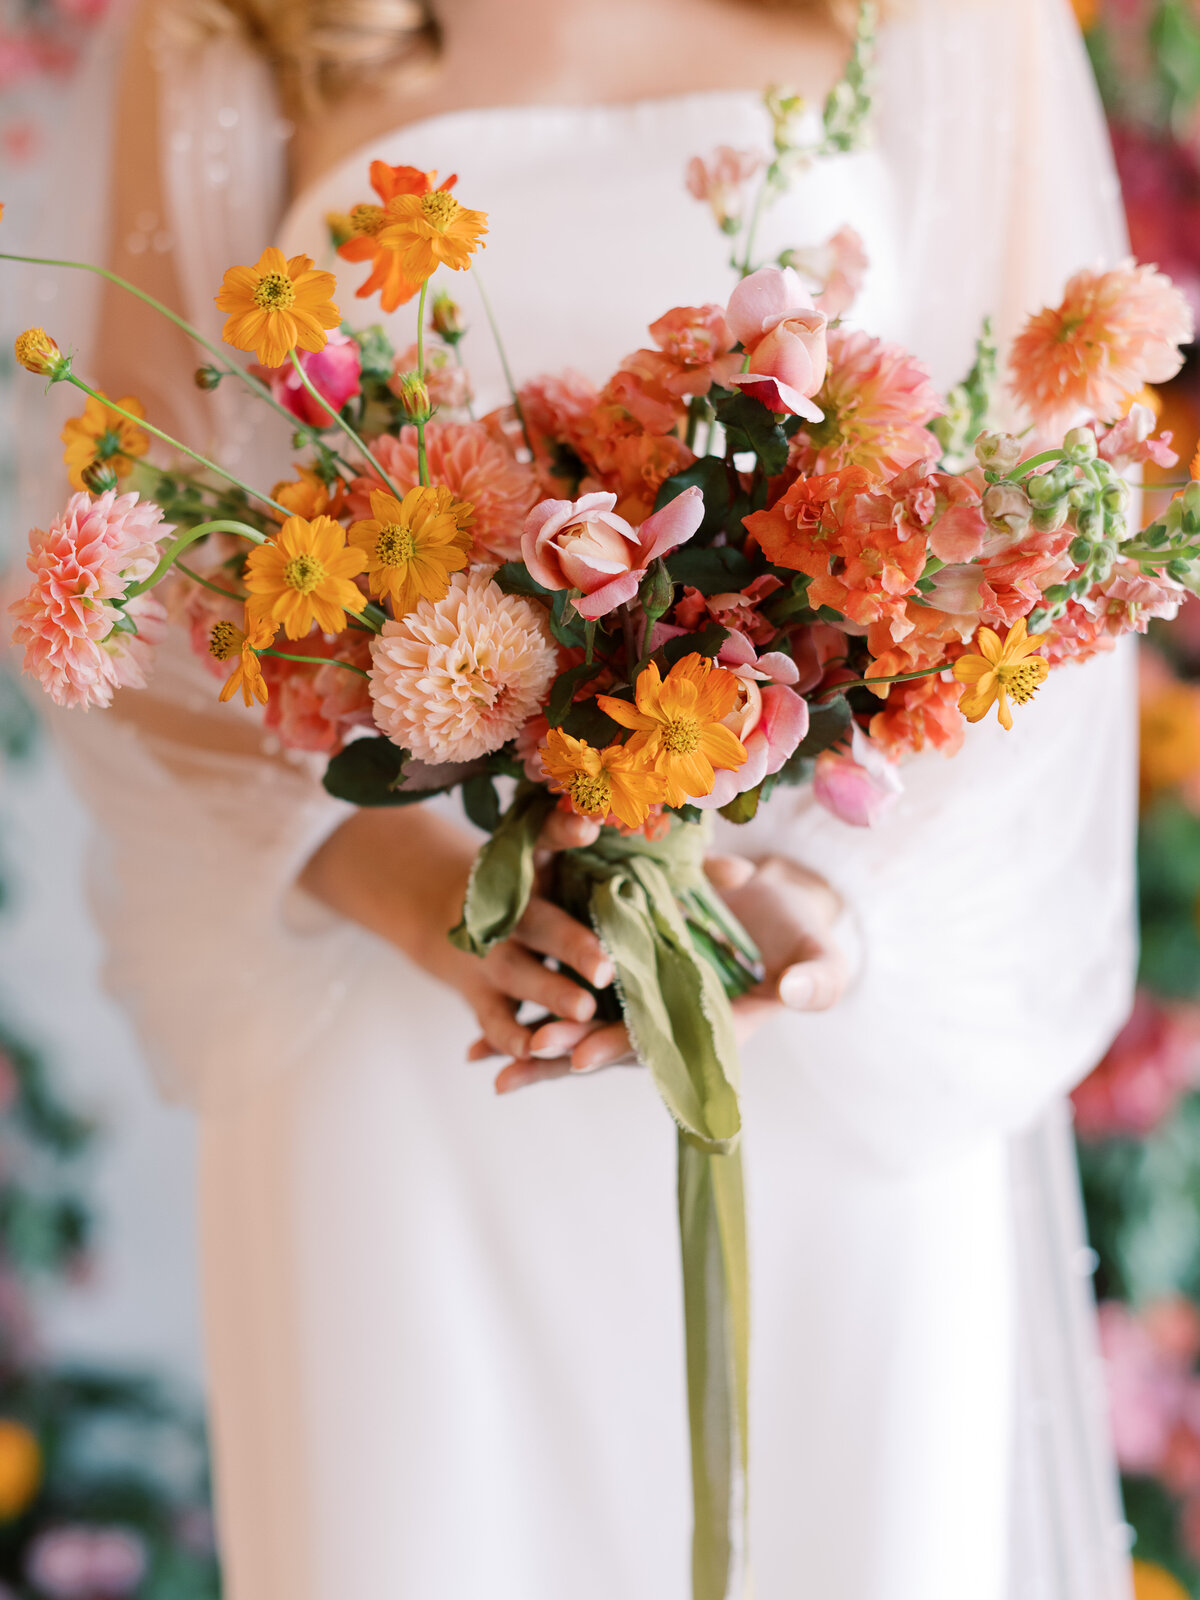 Sarah Rae Floral Designs Wedding Event Florist Flowers Kentucky Chic Whimsical Romantic Weddings25